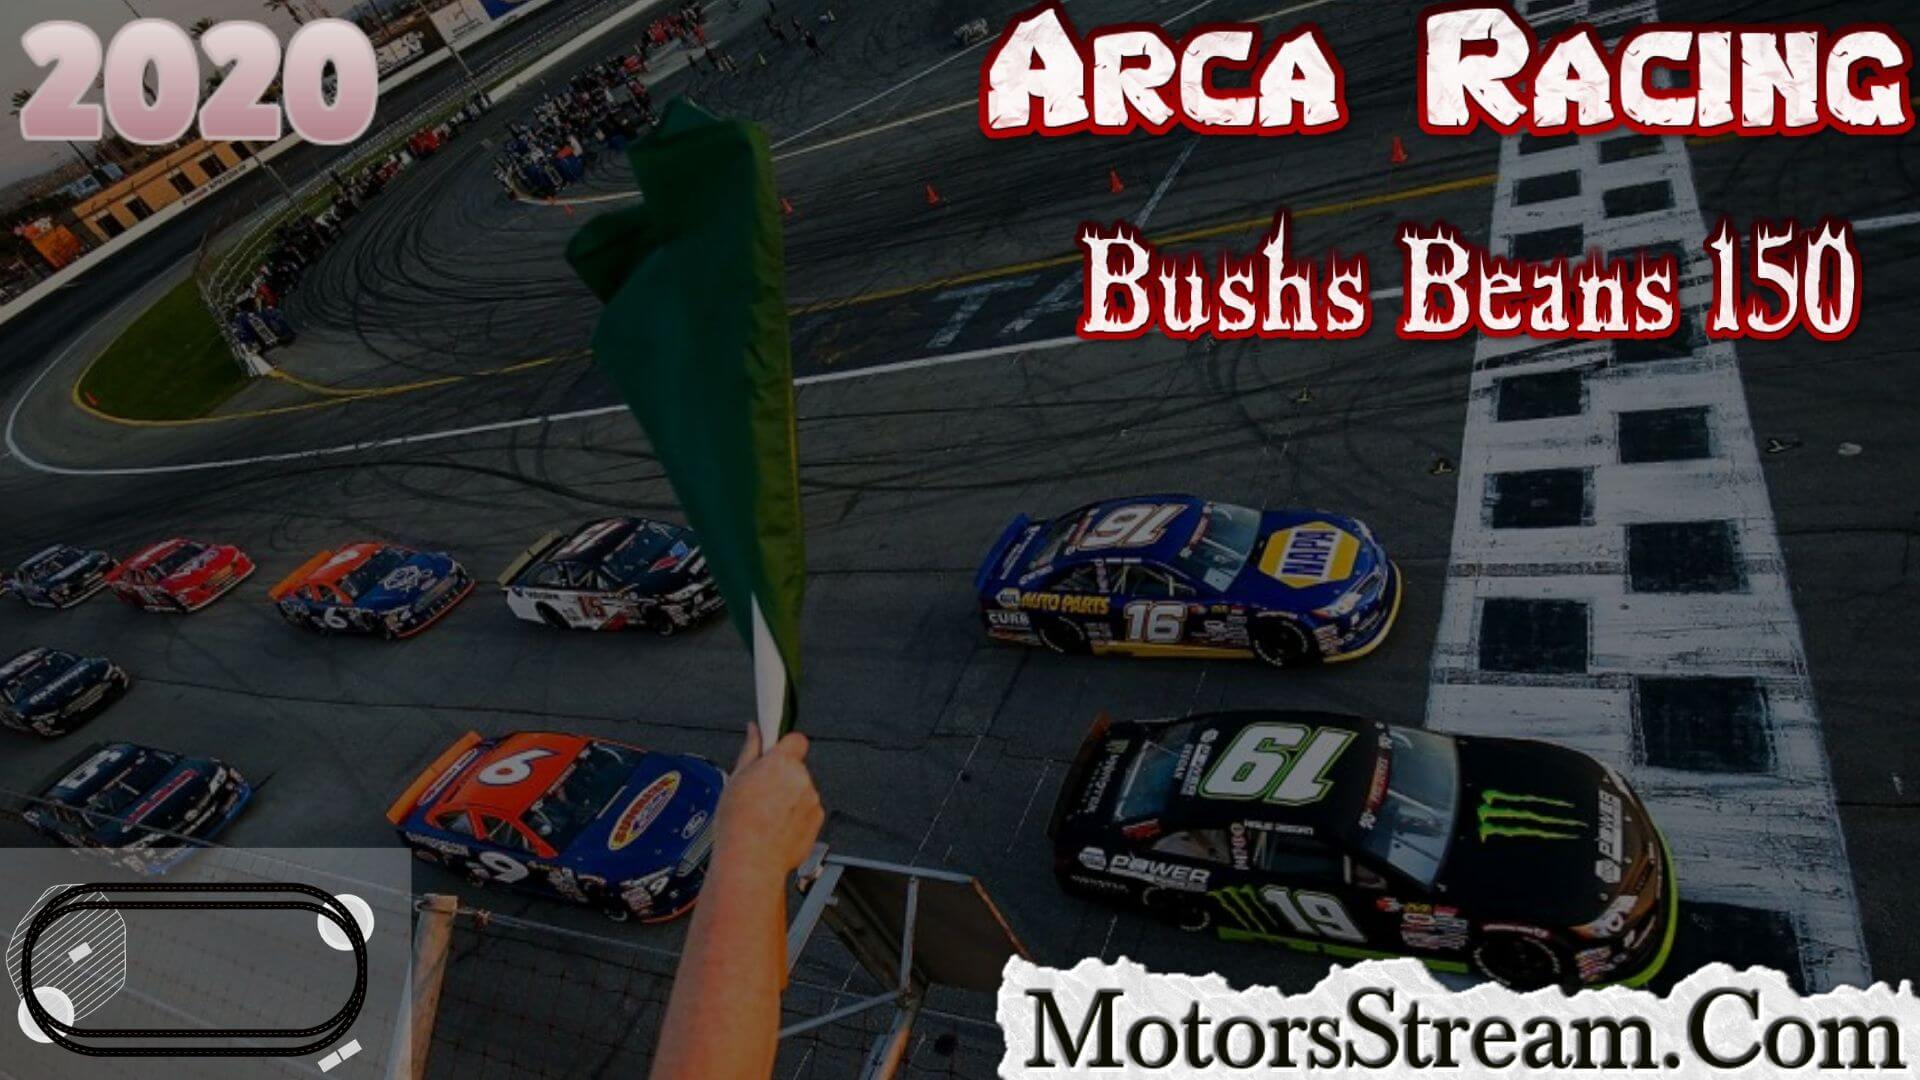 ARCA Race Bushs Beans 200 Live Stream